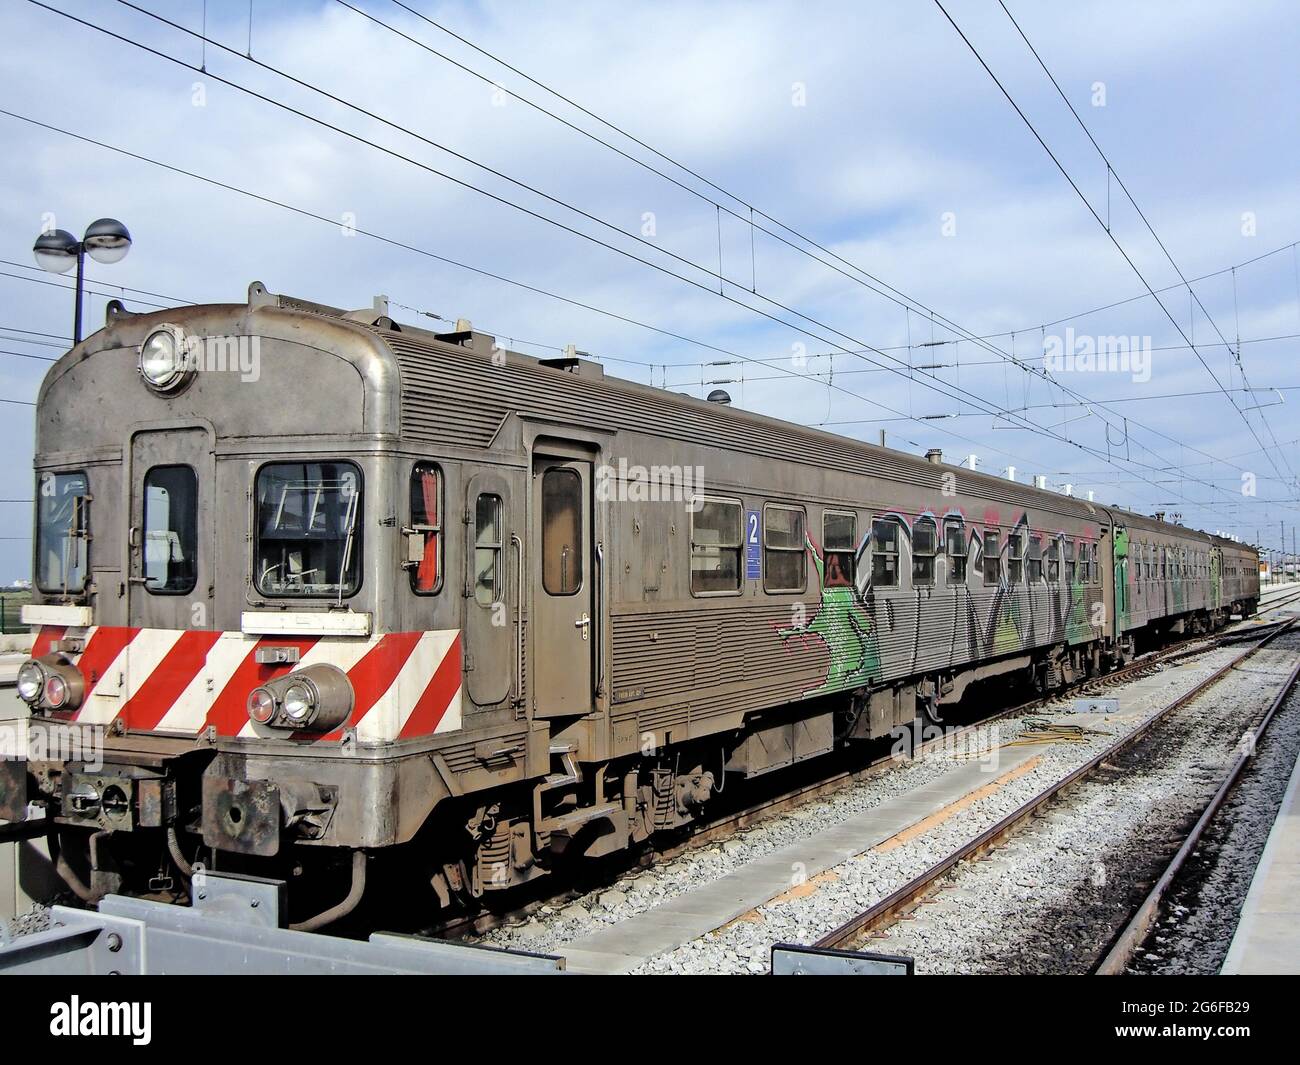 Graffiti Railway Wagon High Resolution Stock Photography And Images Alamy